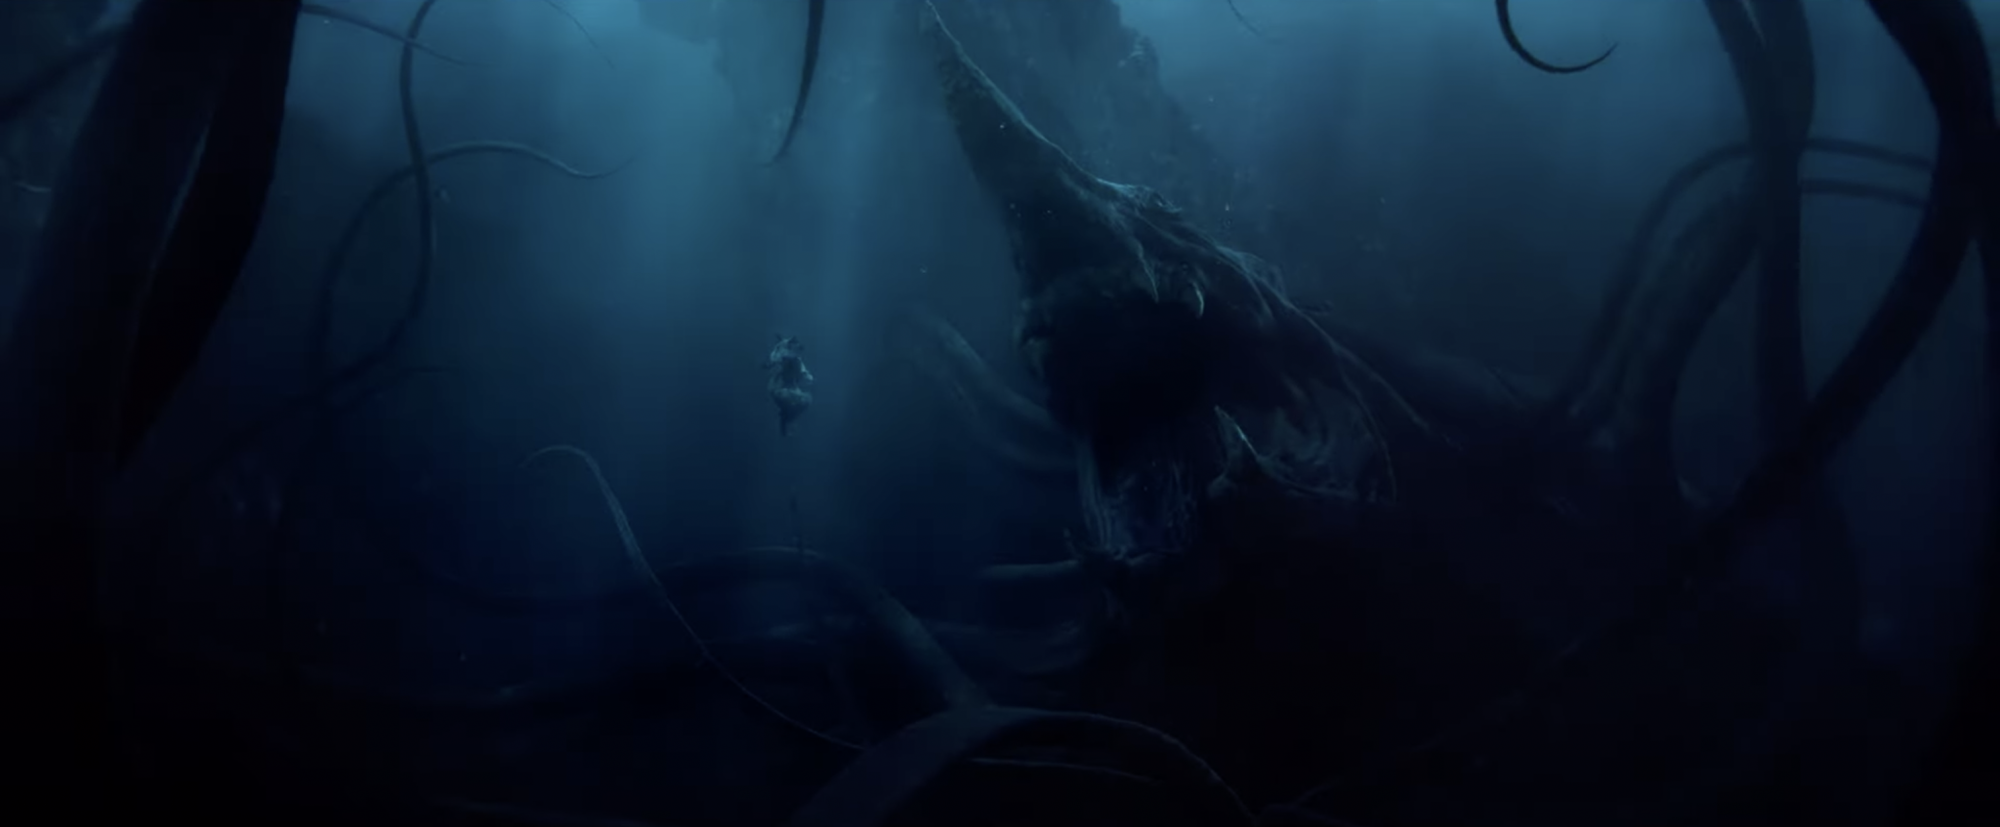 Un très gros monstre marin dans les profondeurs de l'océan.